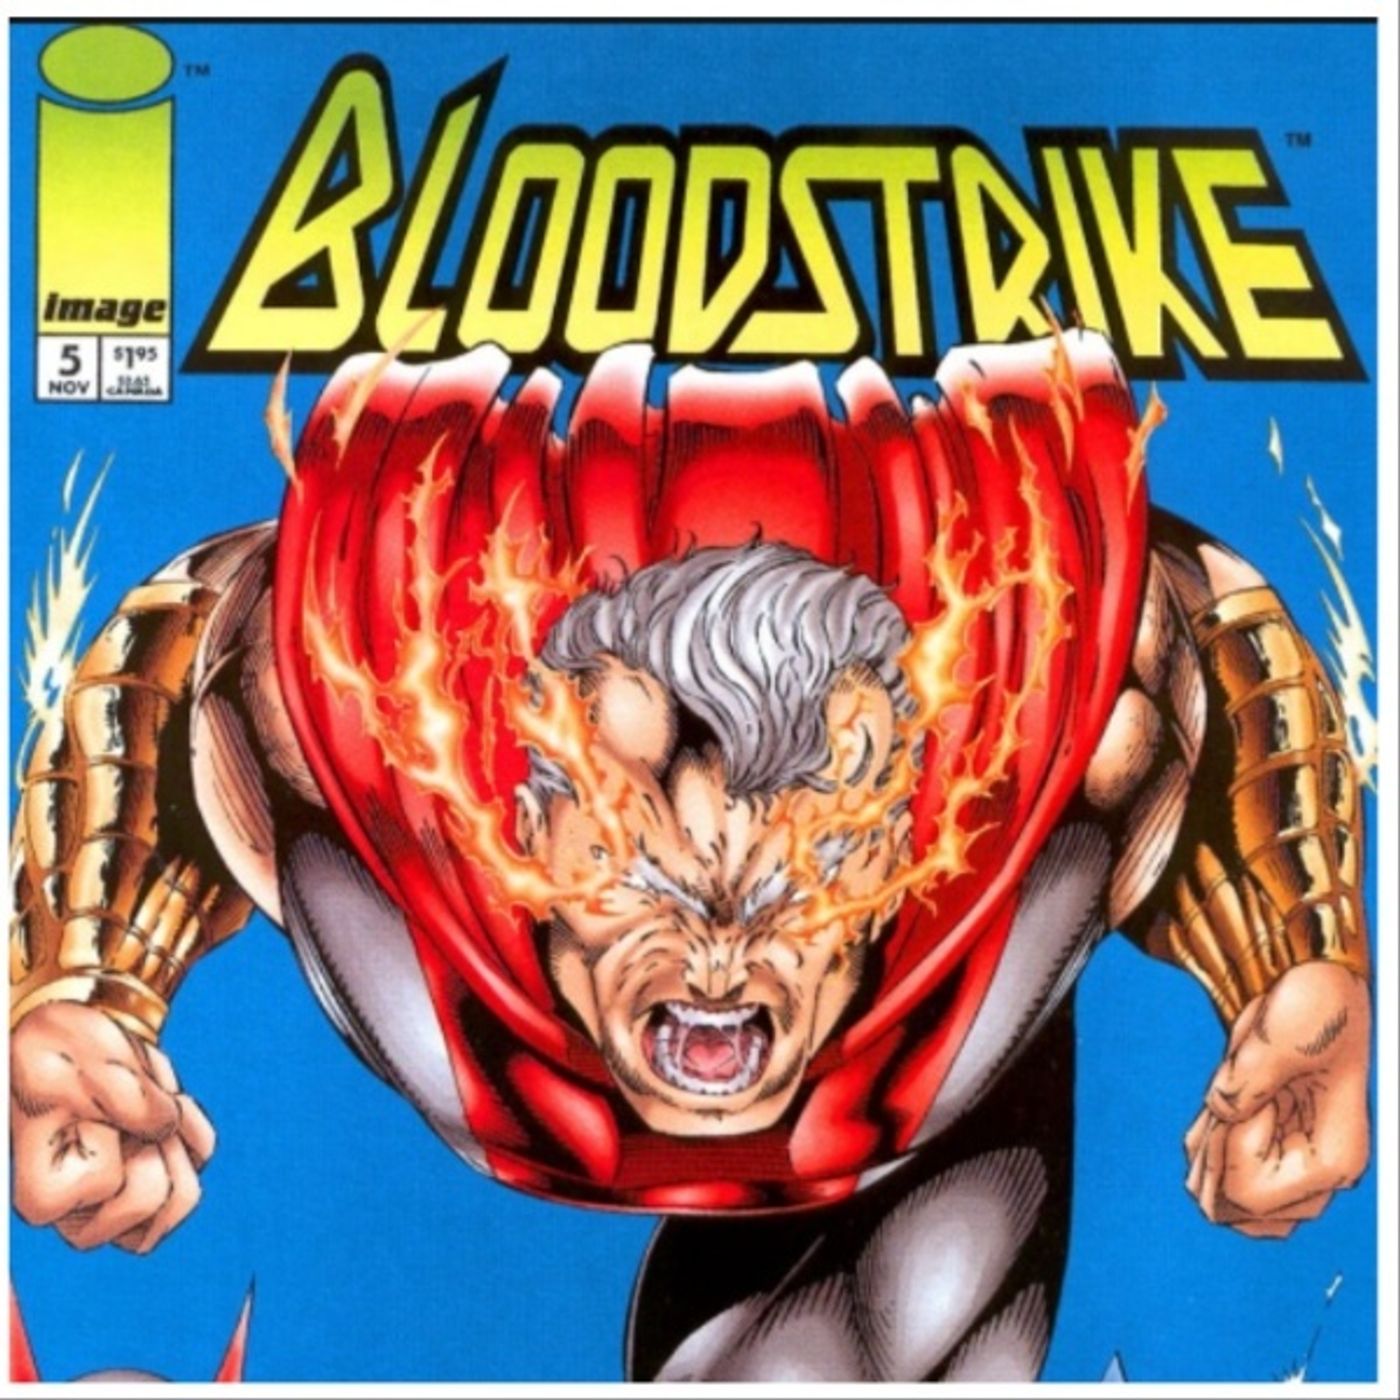 Unspoken Issues #92 - Supreme vs. Bloodstrike